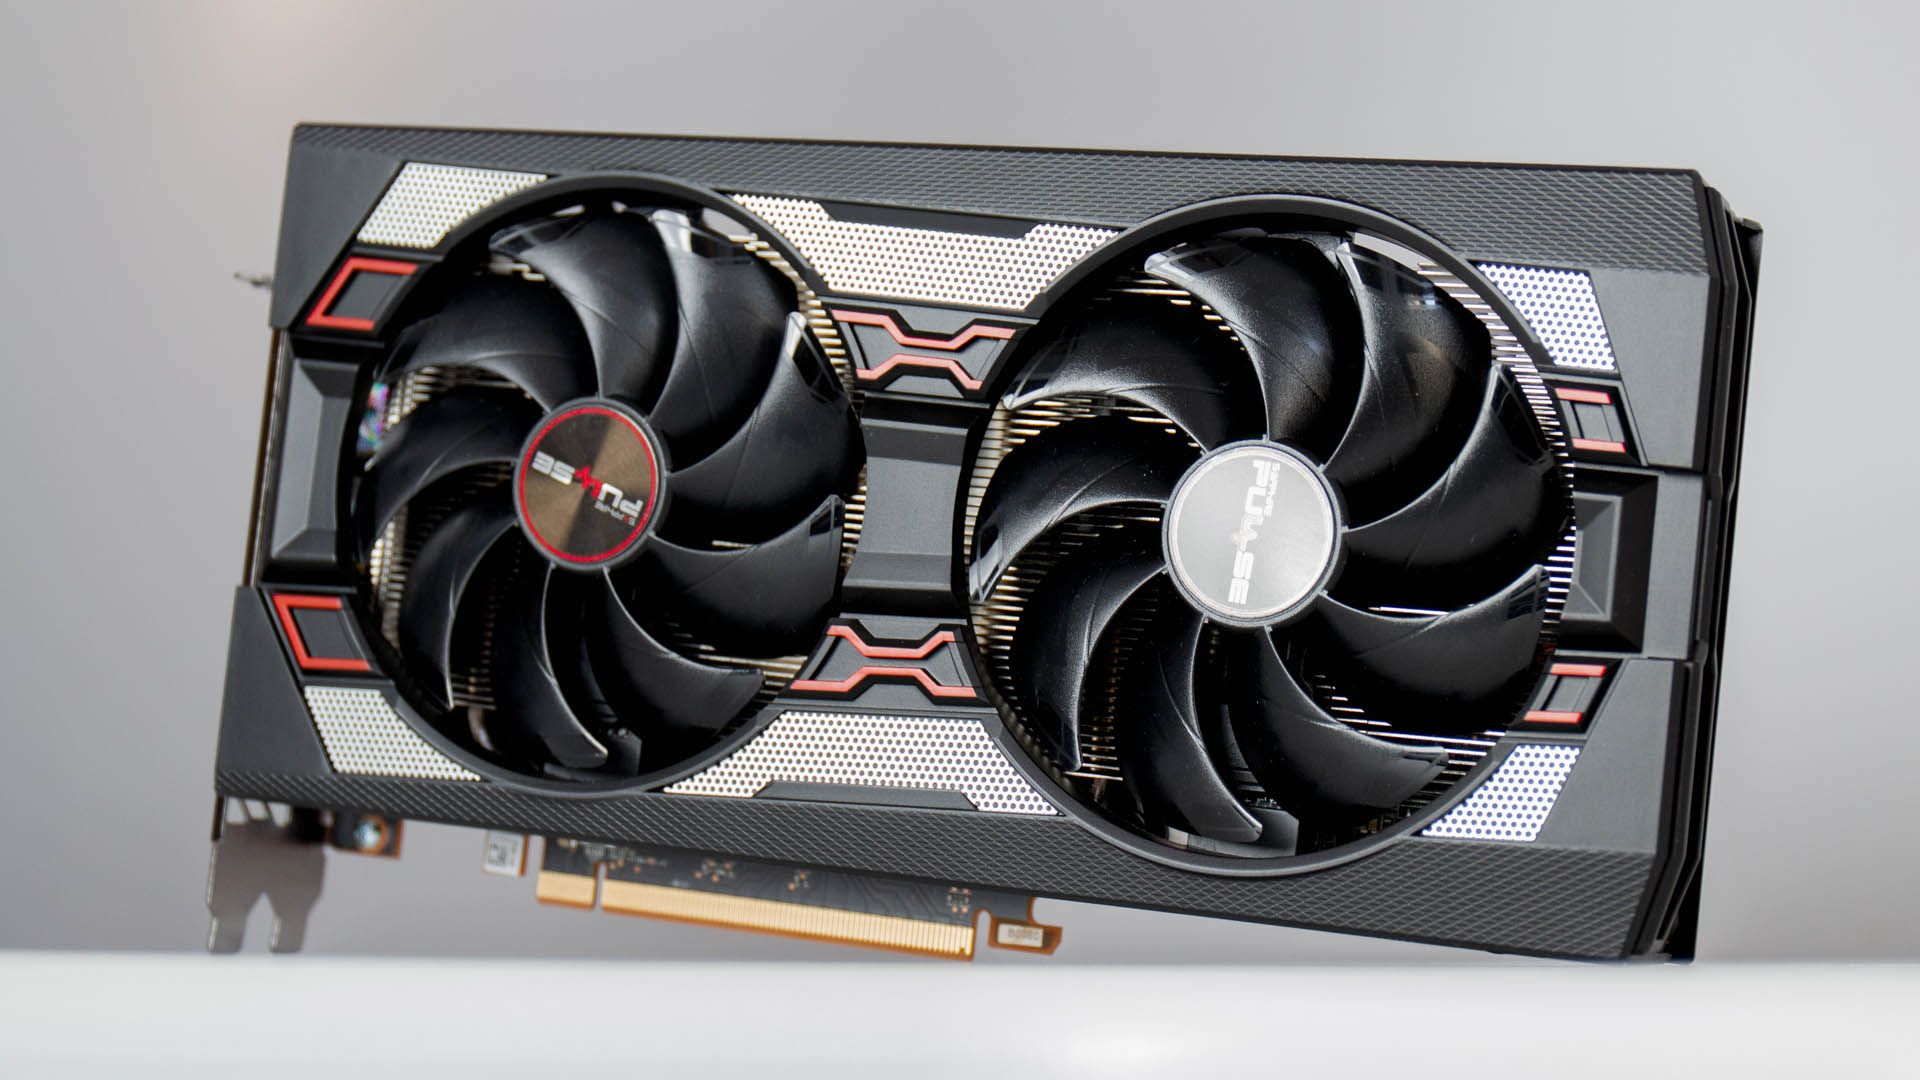 AMD Radeon RX 5600 XT review: Sapphire's Pulse packs RTX 2060